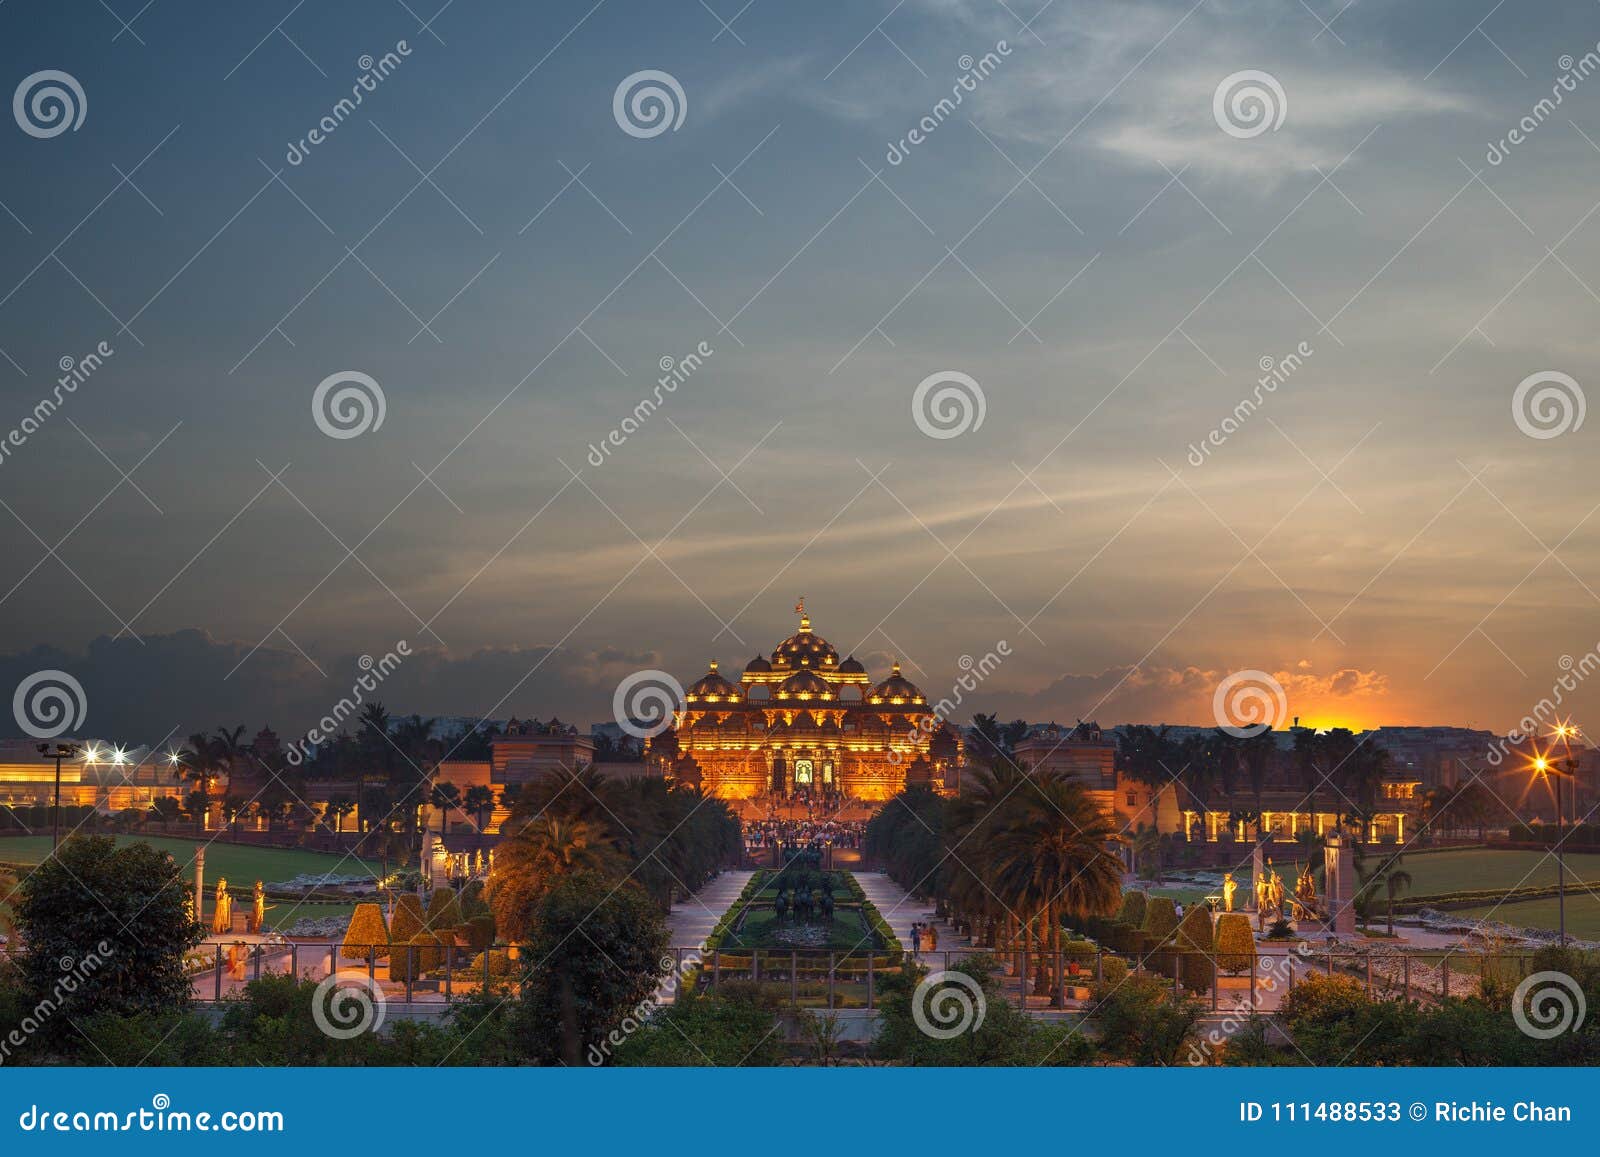 night view of akshardham temple in delhi, india